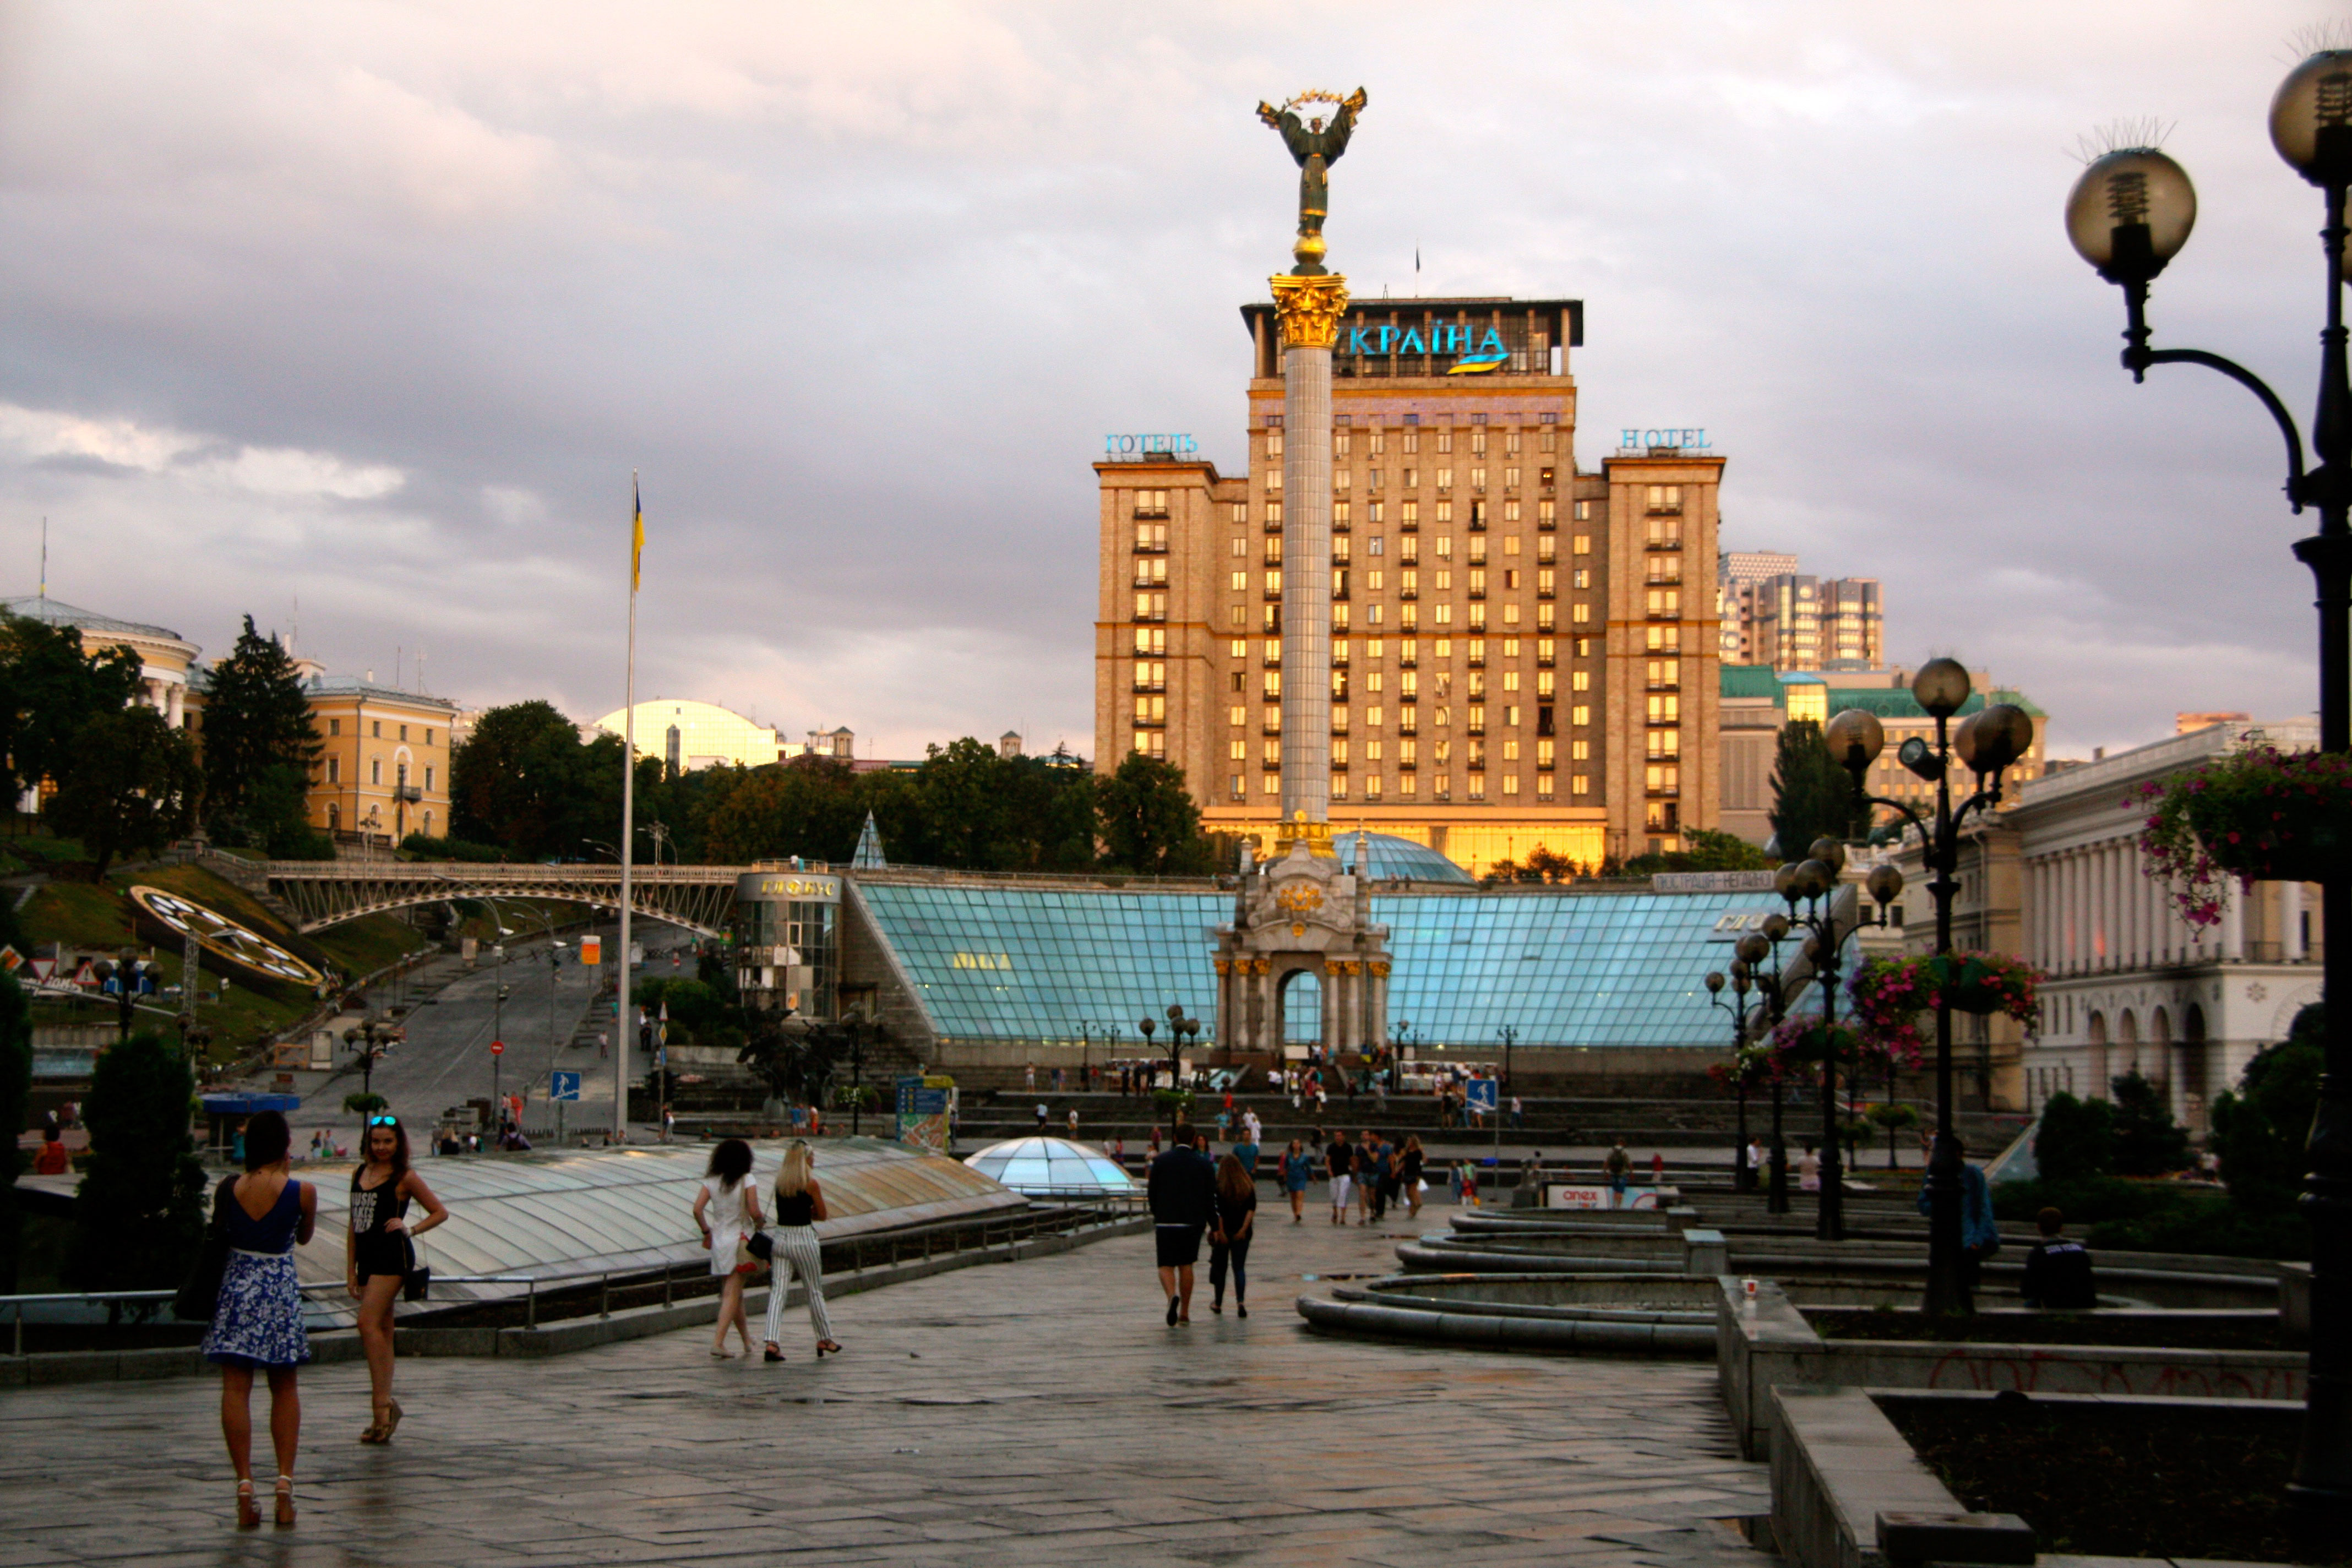 Ukraine’s Independence Square—the Maidan.